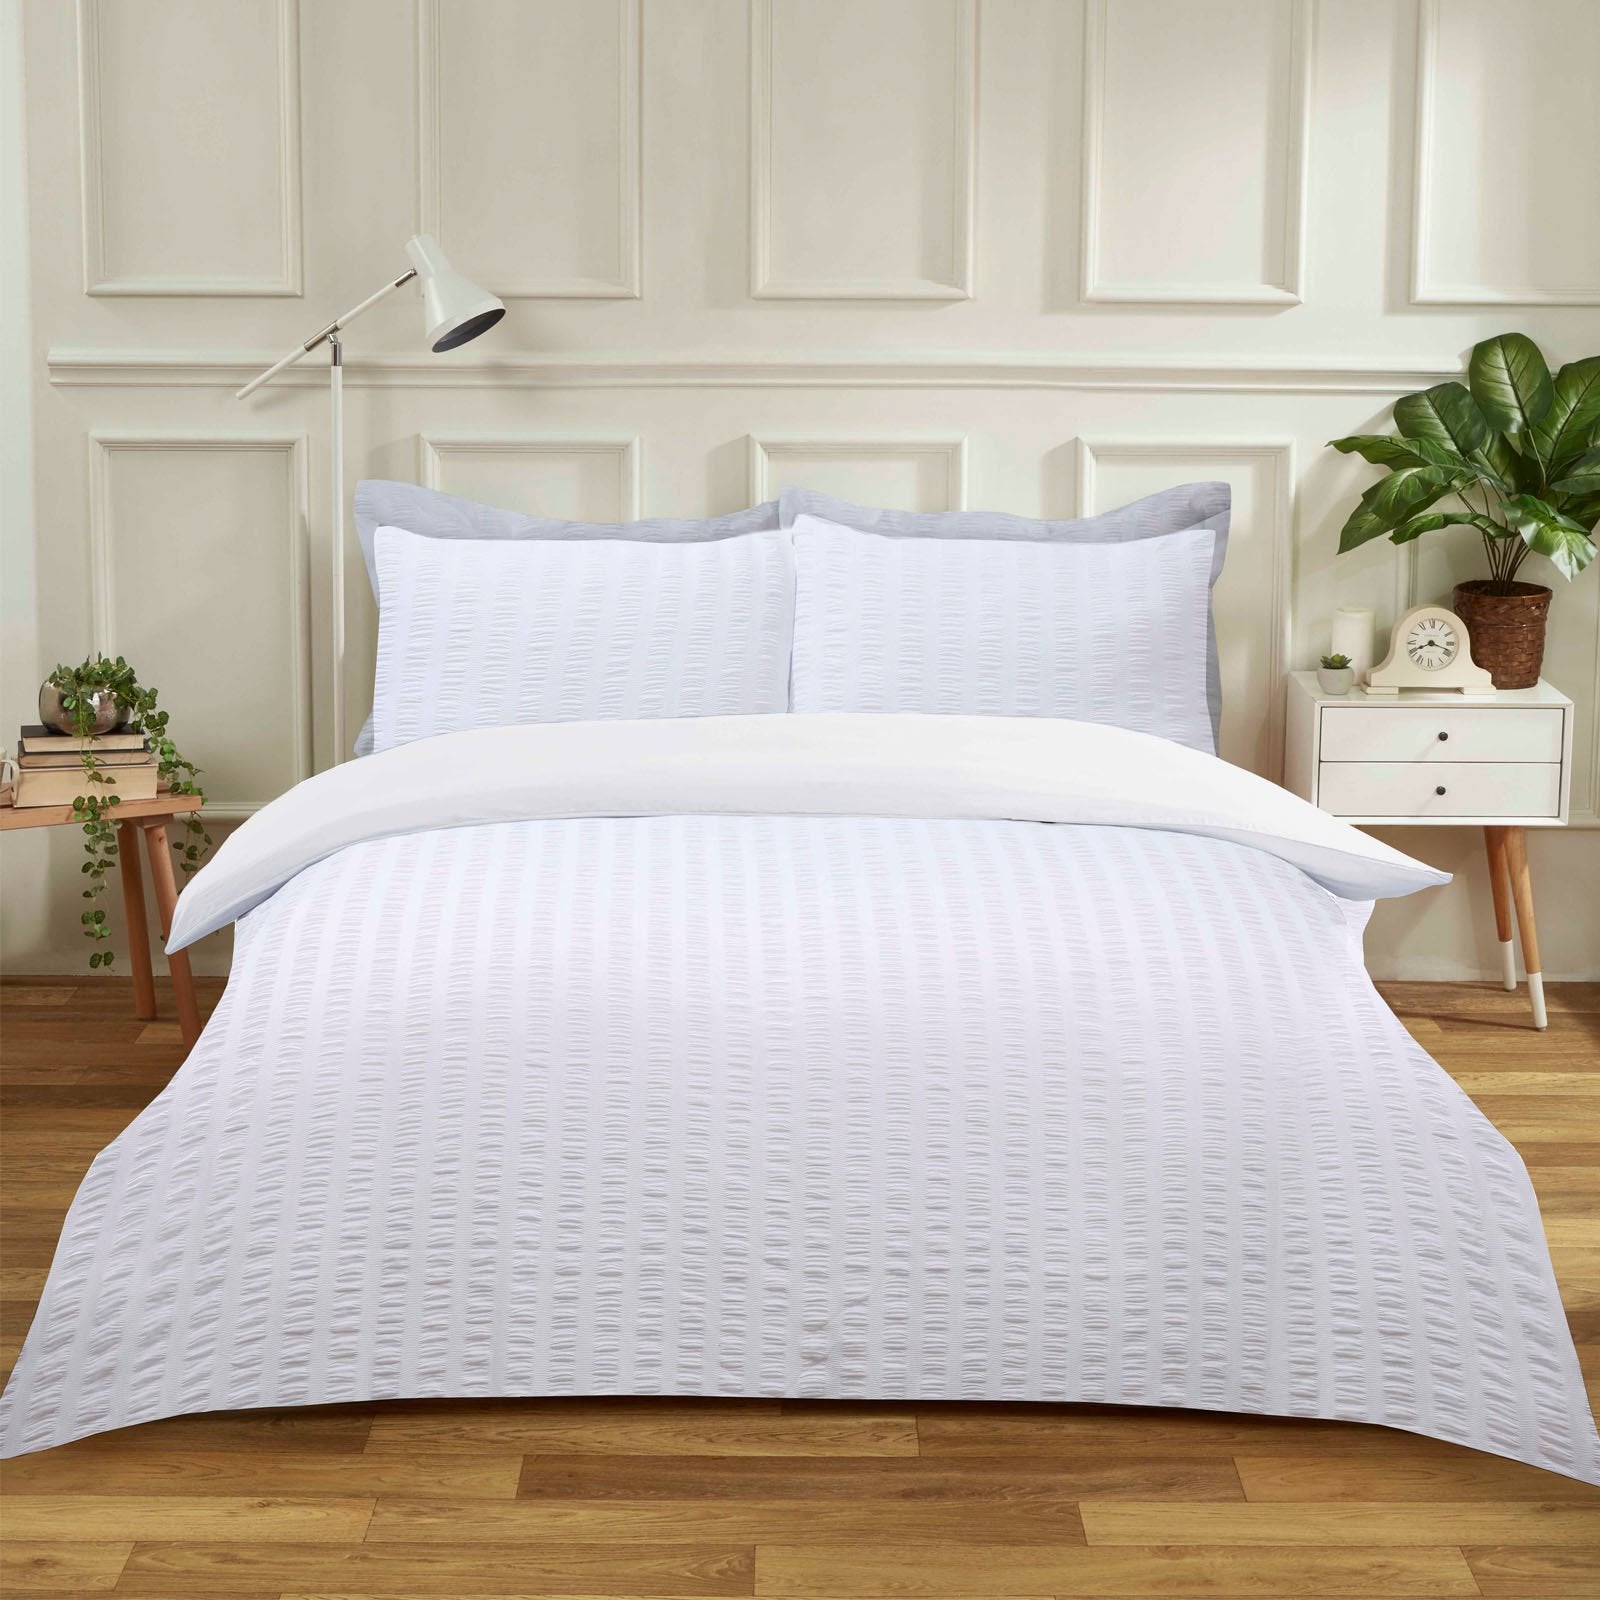 Seersucker Duvet Cover Bedding Set with Pillowcase White Silver